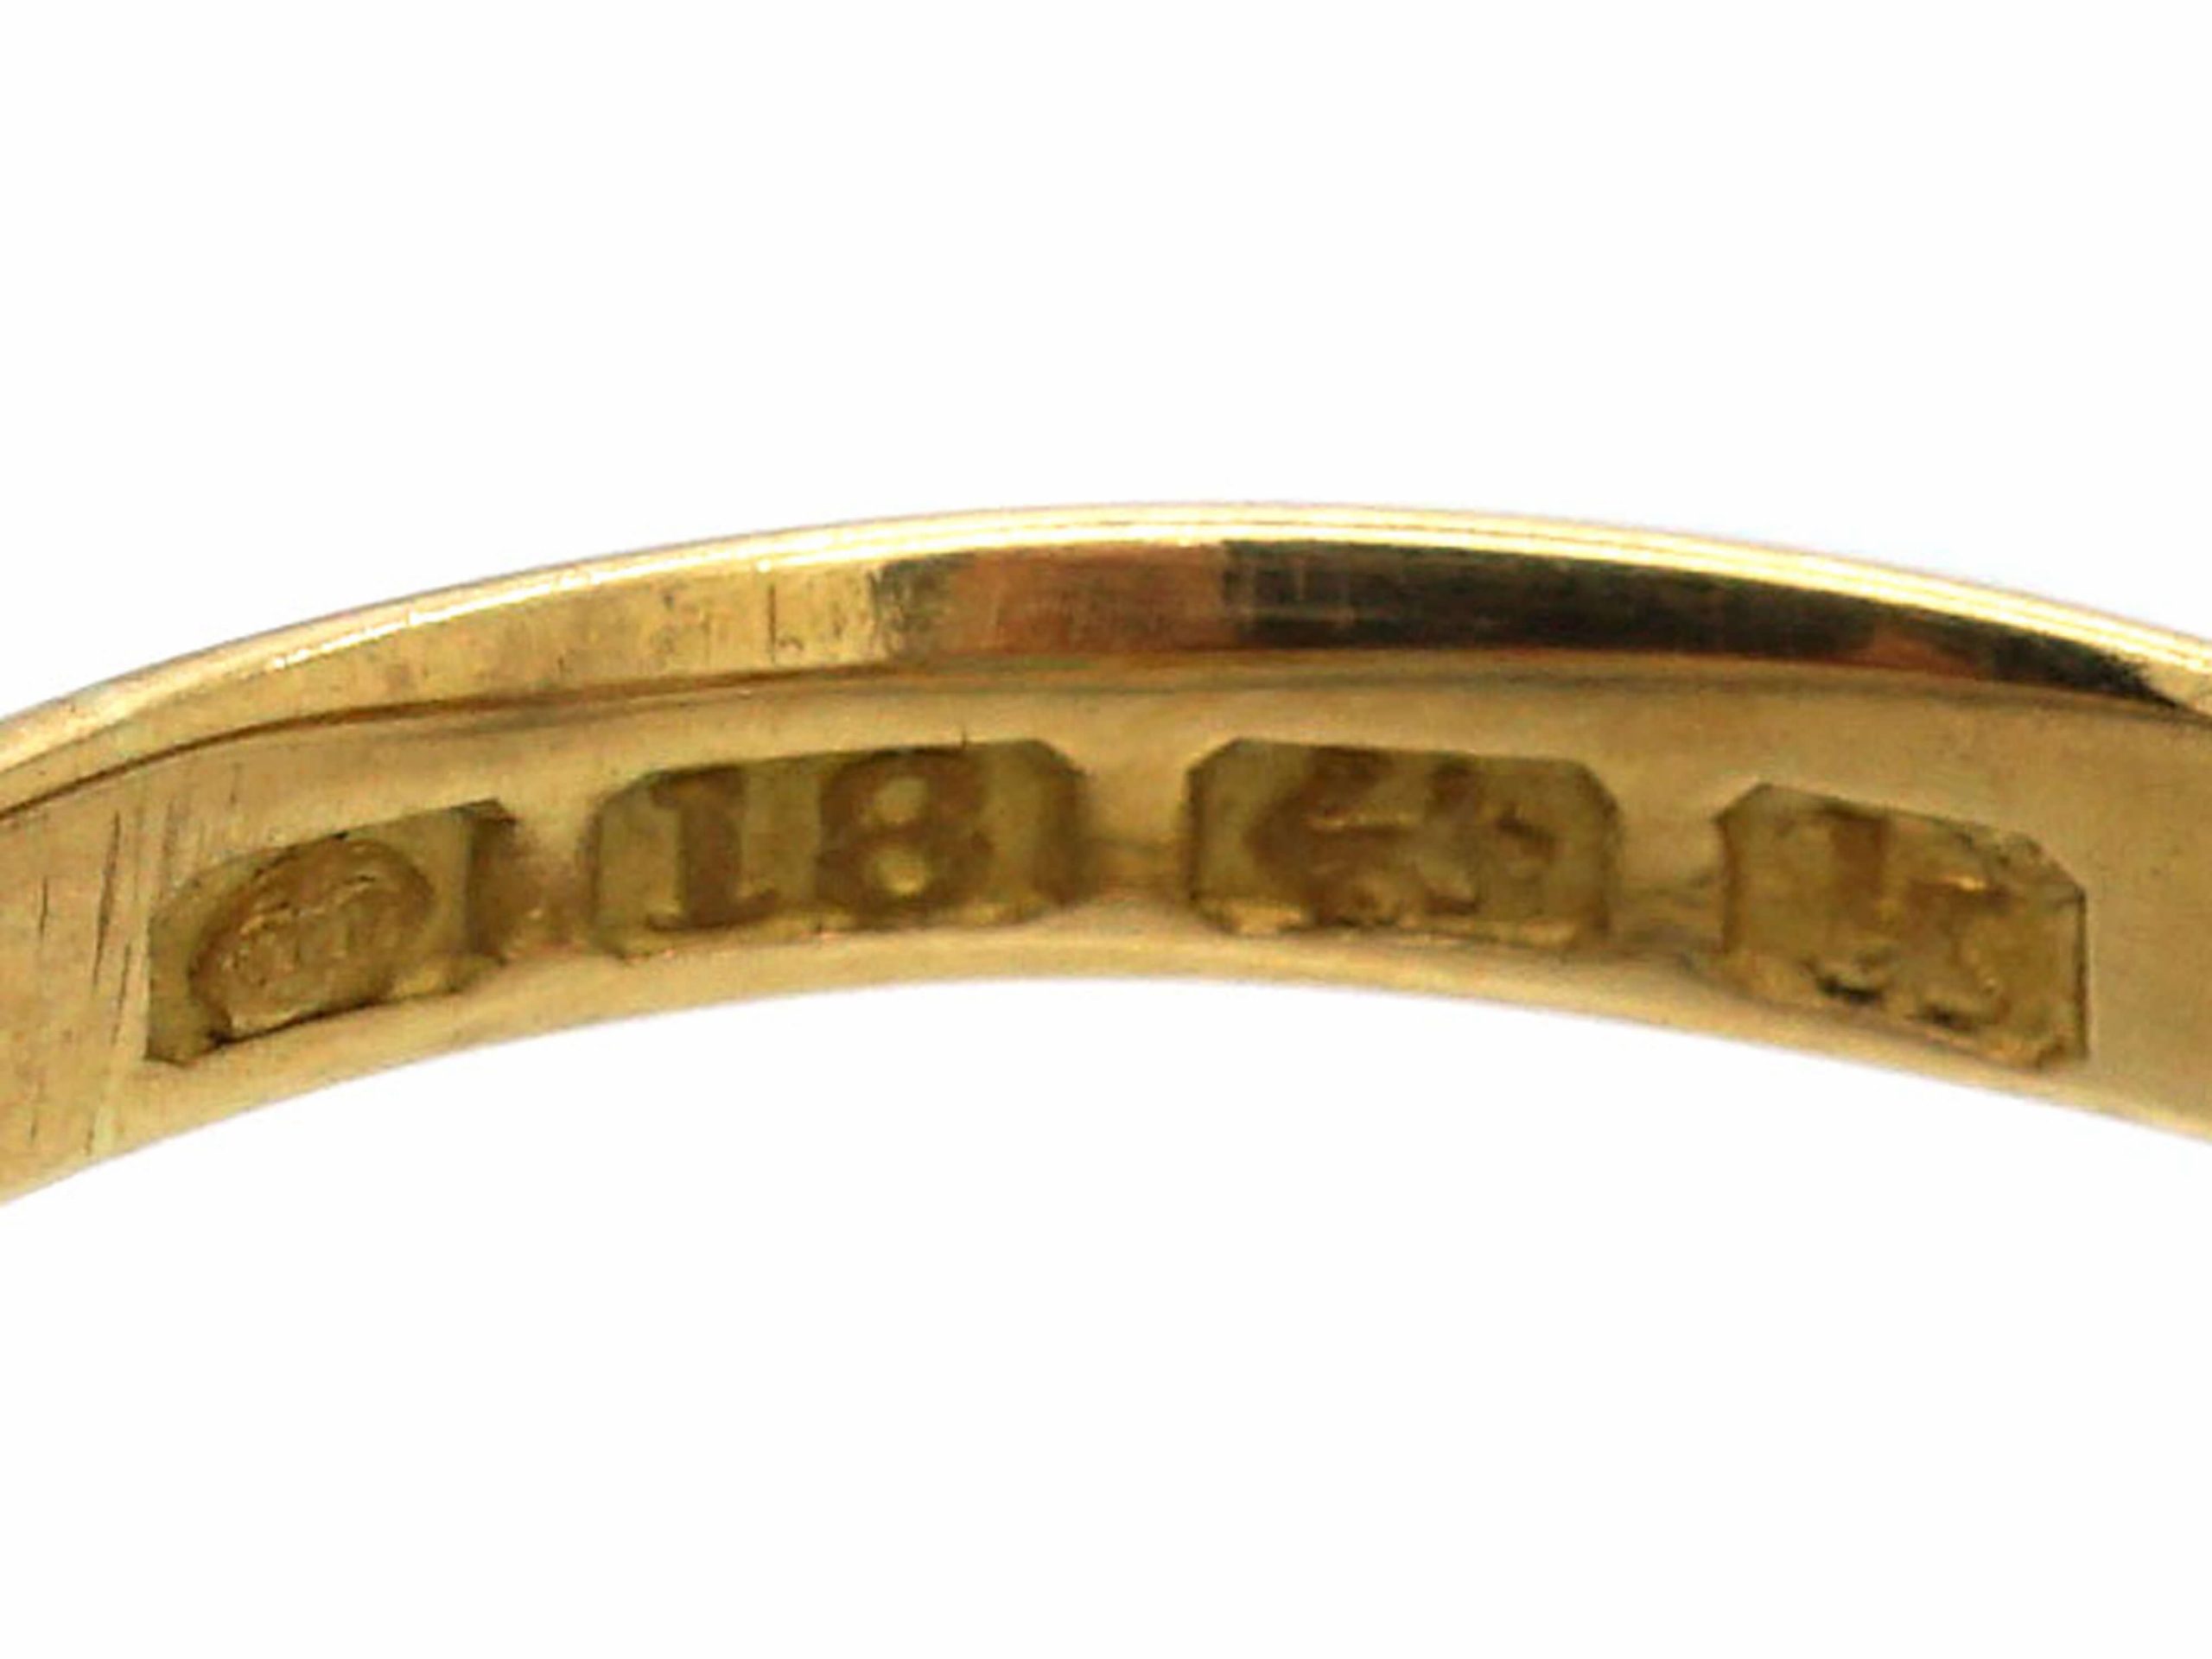 Edwardian 18ct Gold, Three Stone Opal & Diamond Ring (295S) | The ...